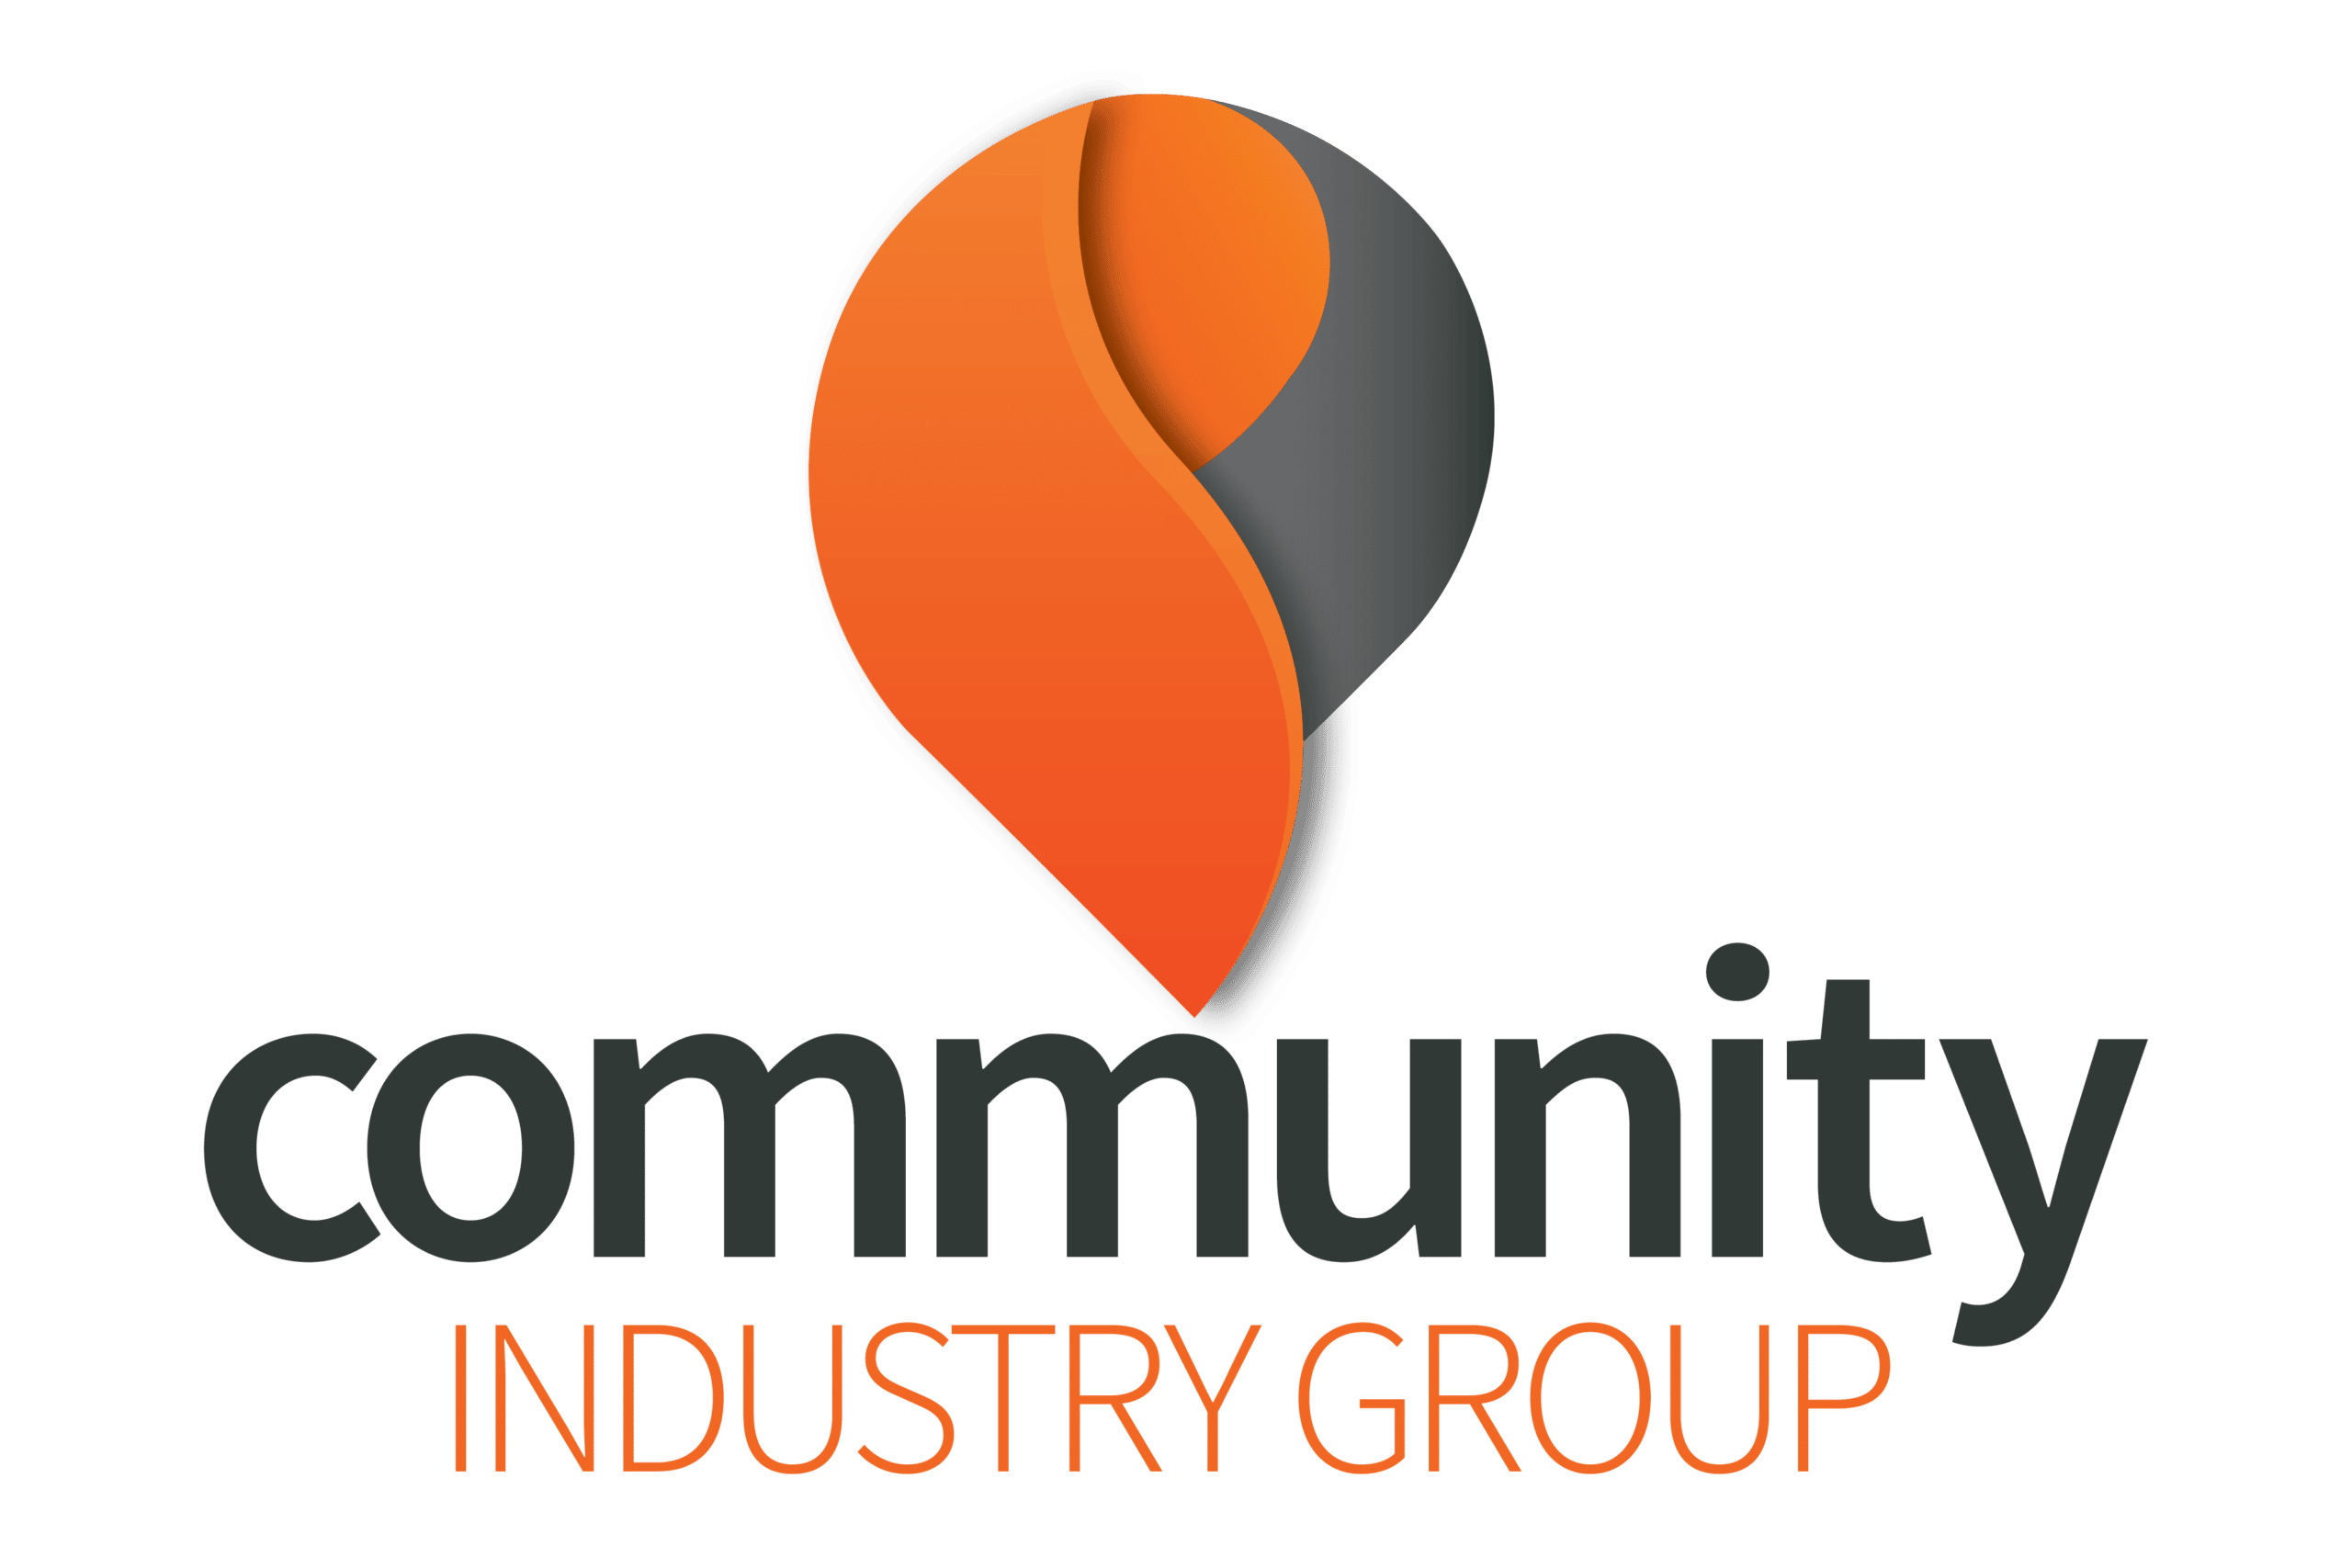  Community Industry Group logo